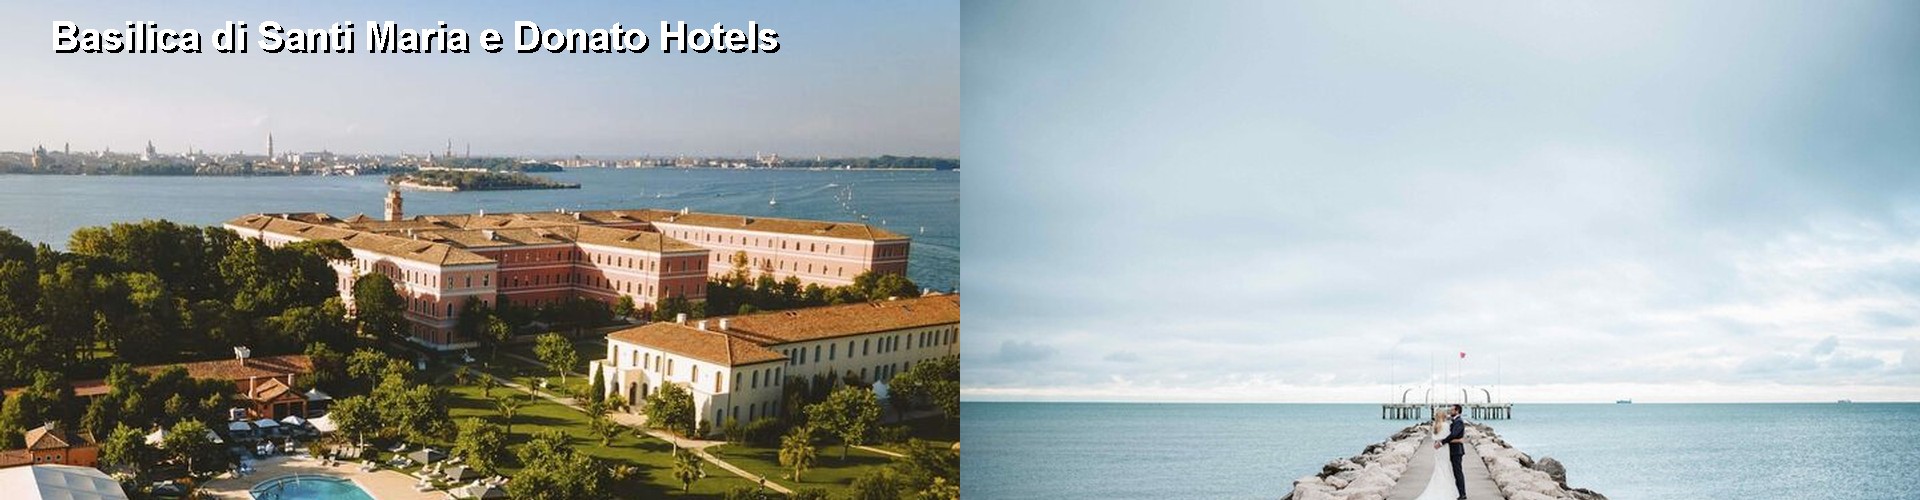 5 Best Hotels near Basilica di Santi Maria e Donato